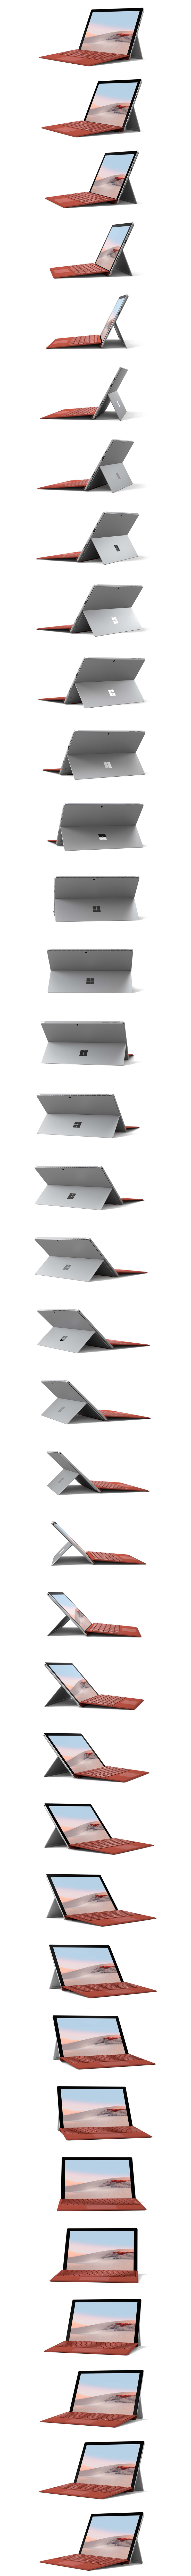 Surface Pro 7 360 度旋轉